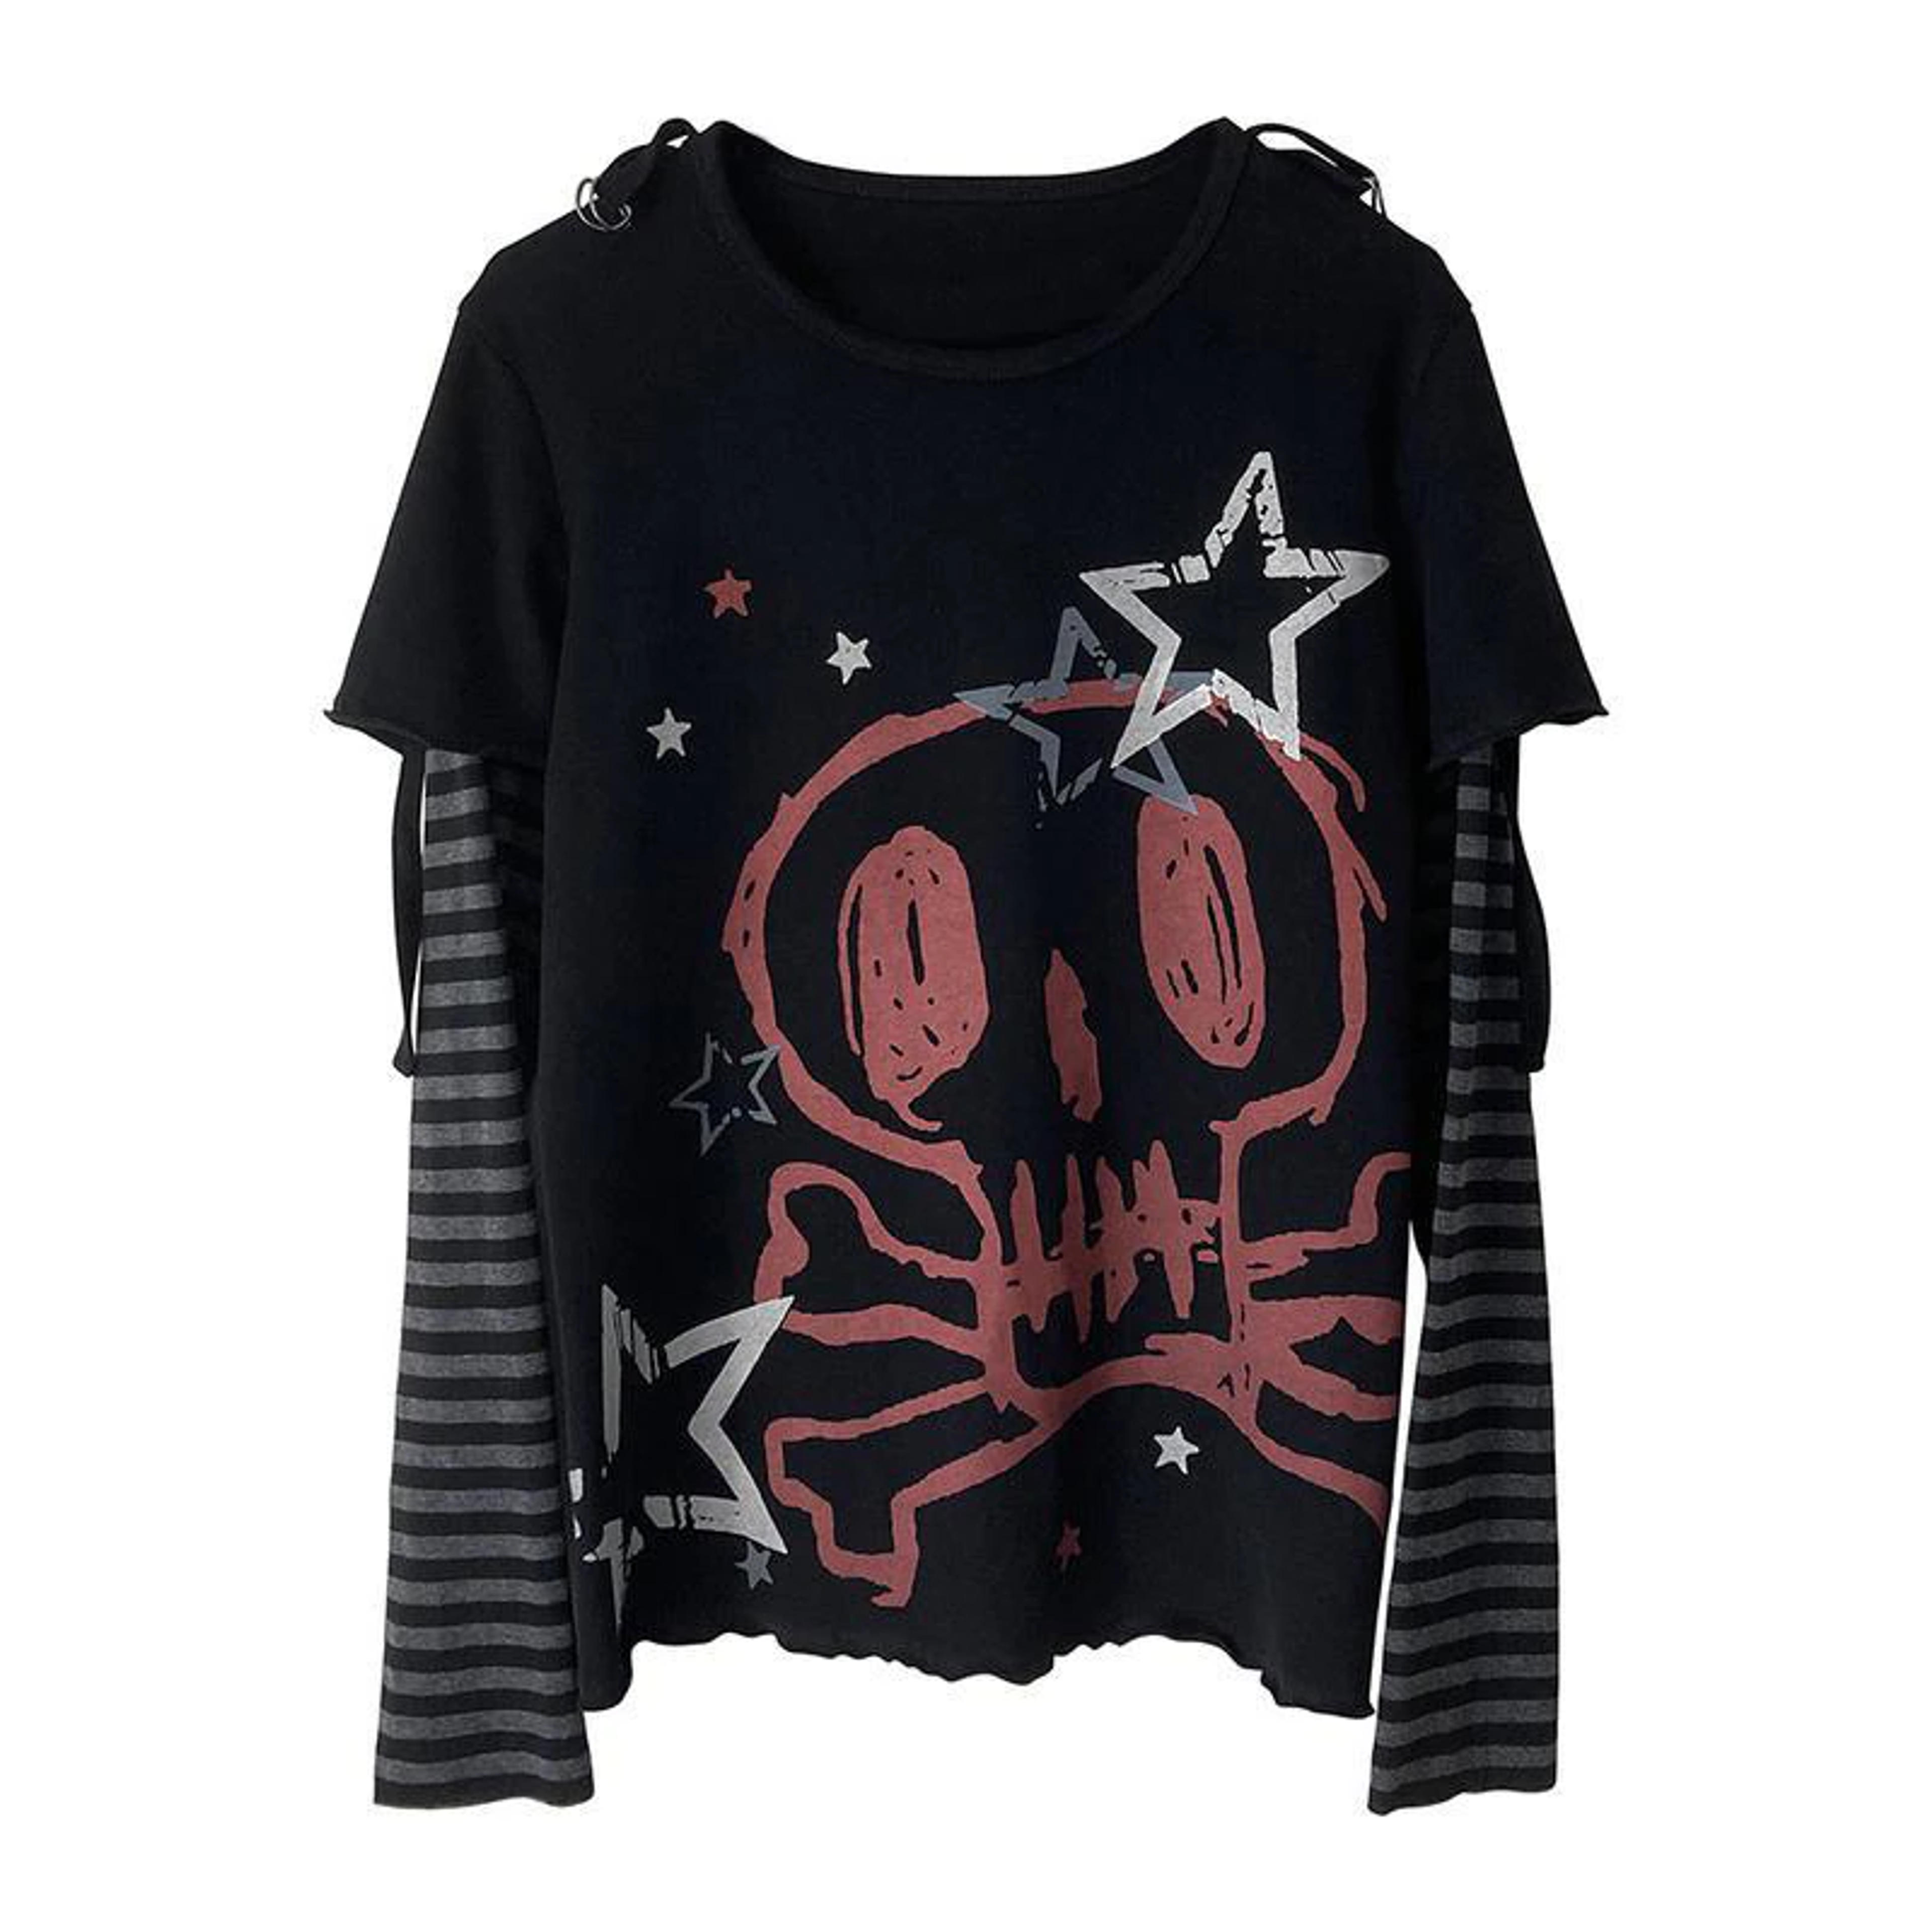 8.16C$ 49% OFF|Grunge Y2k Aesthetic T-shirt Emo Scene Skull Dark Graphic Long Sleeve T Shirt Women Punk Cartoon Harajuku Tee Kawaii Top - T-shirts - AliExpress